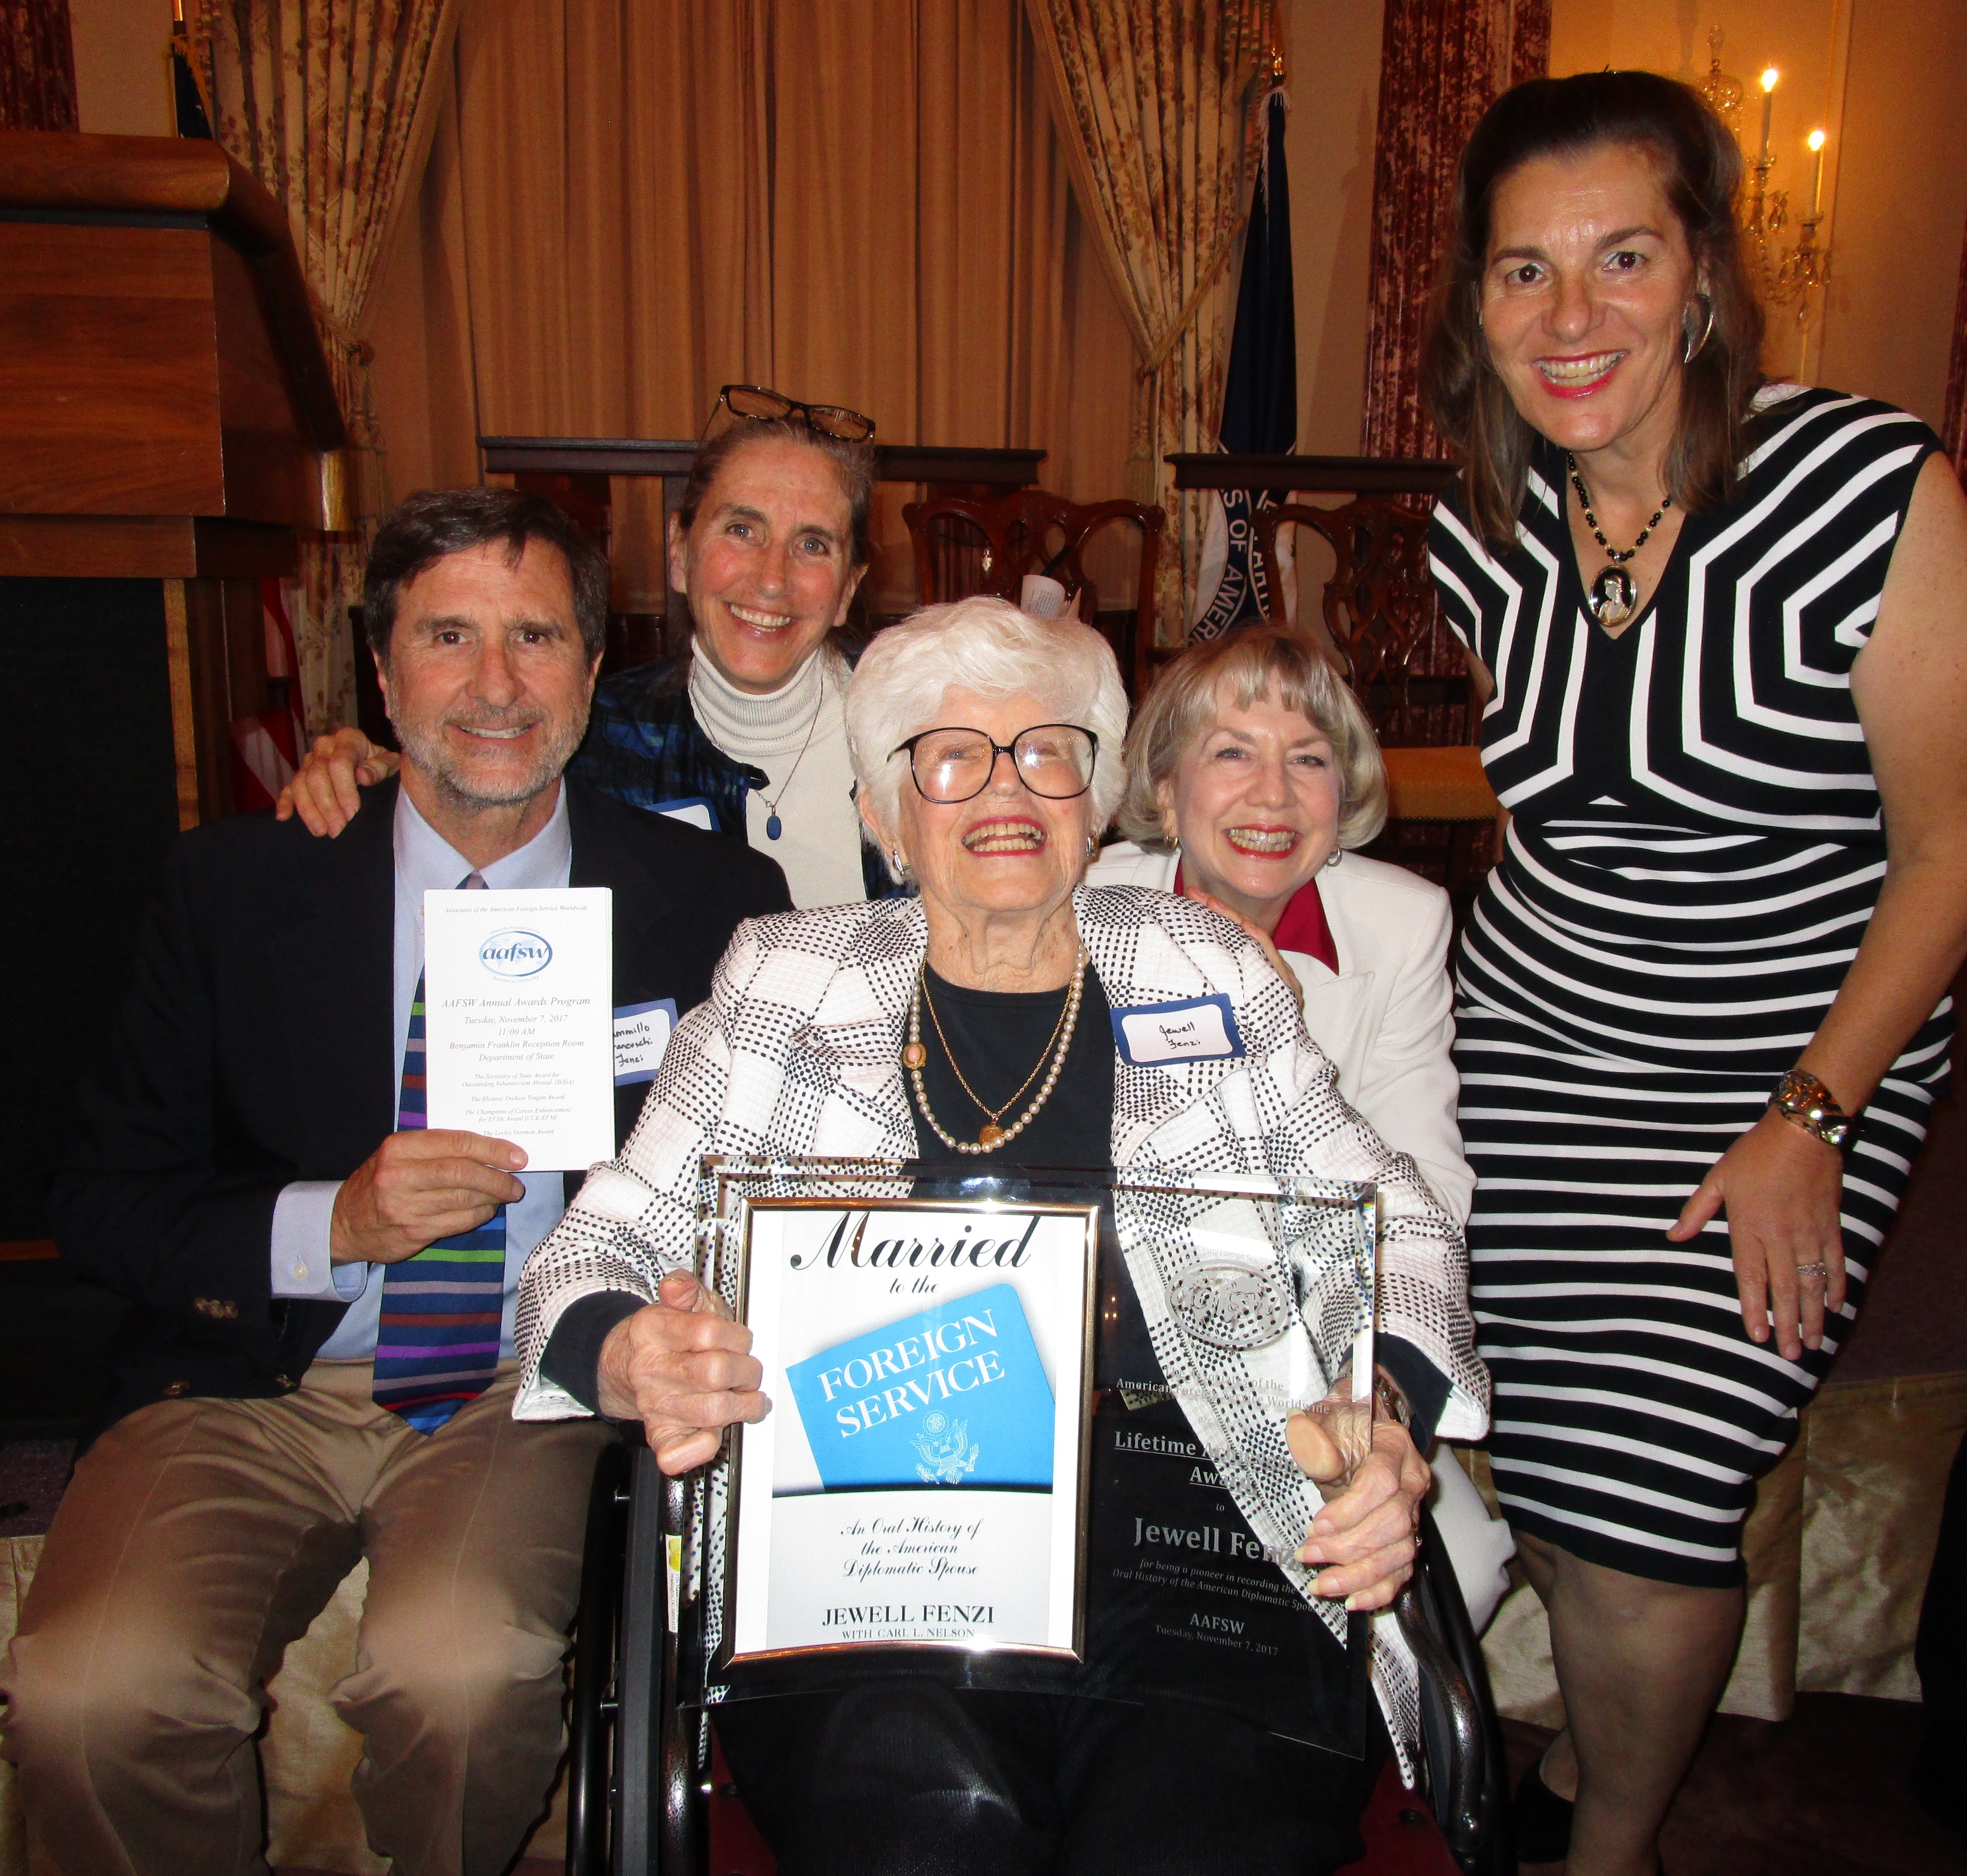 Jewell Fenzi with Award, Family, AAFSW President